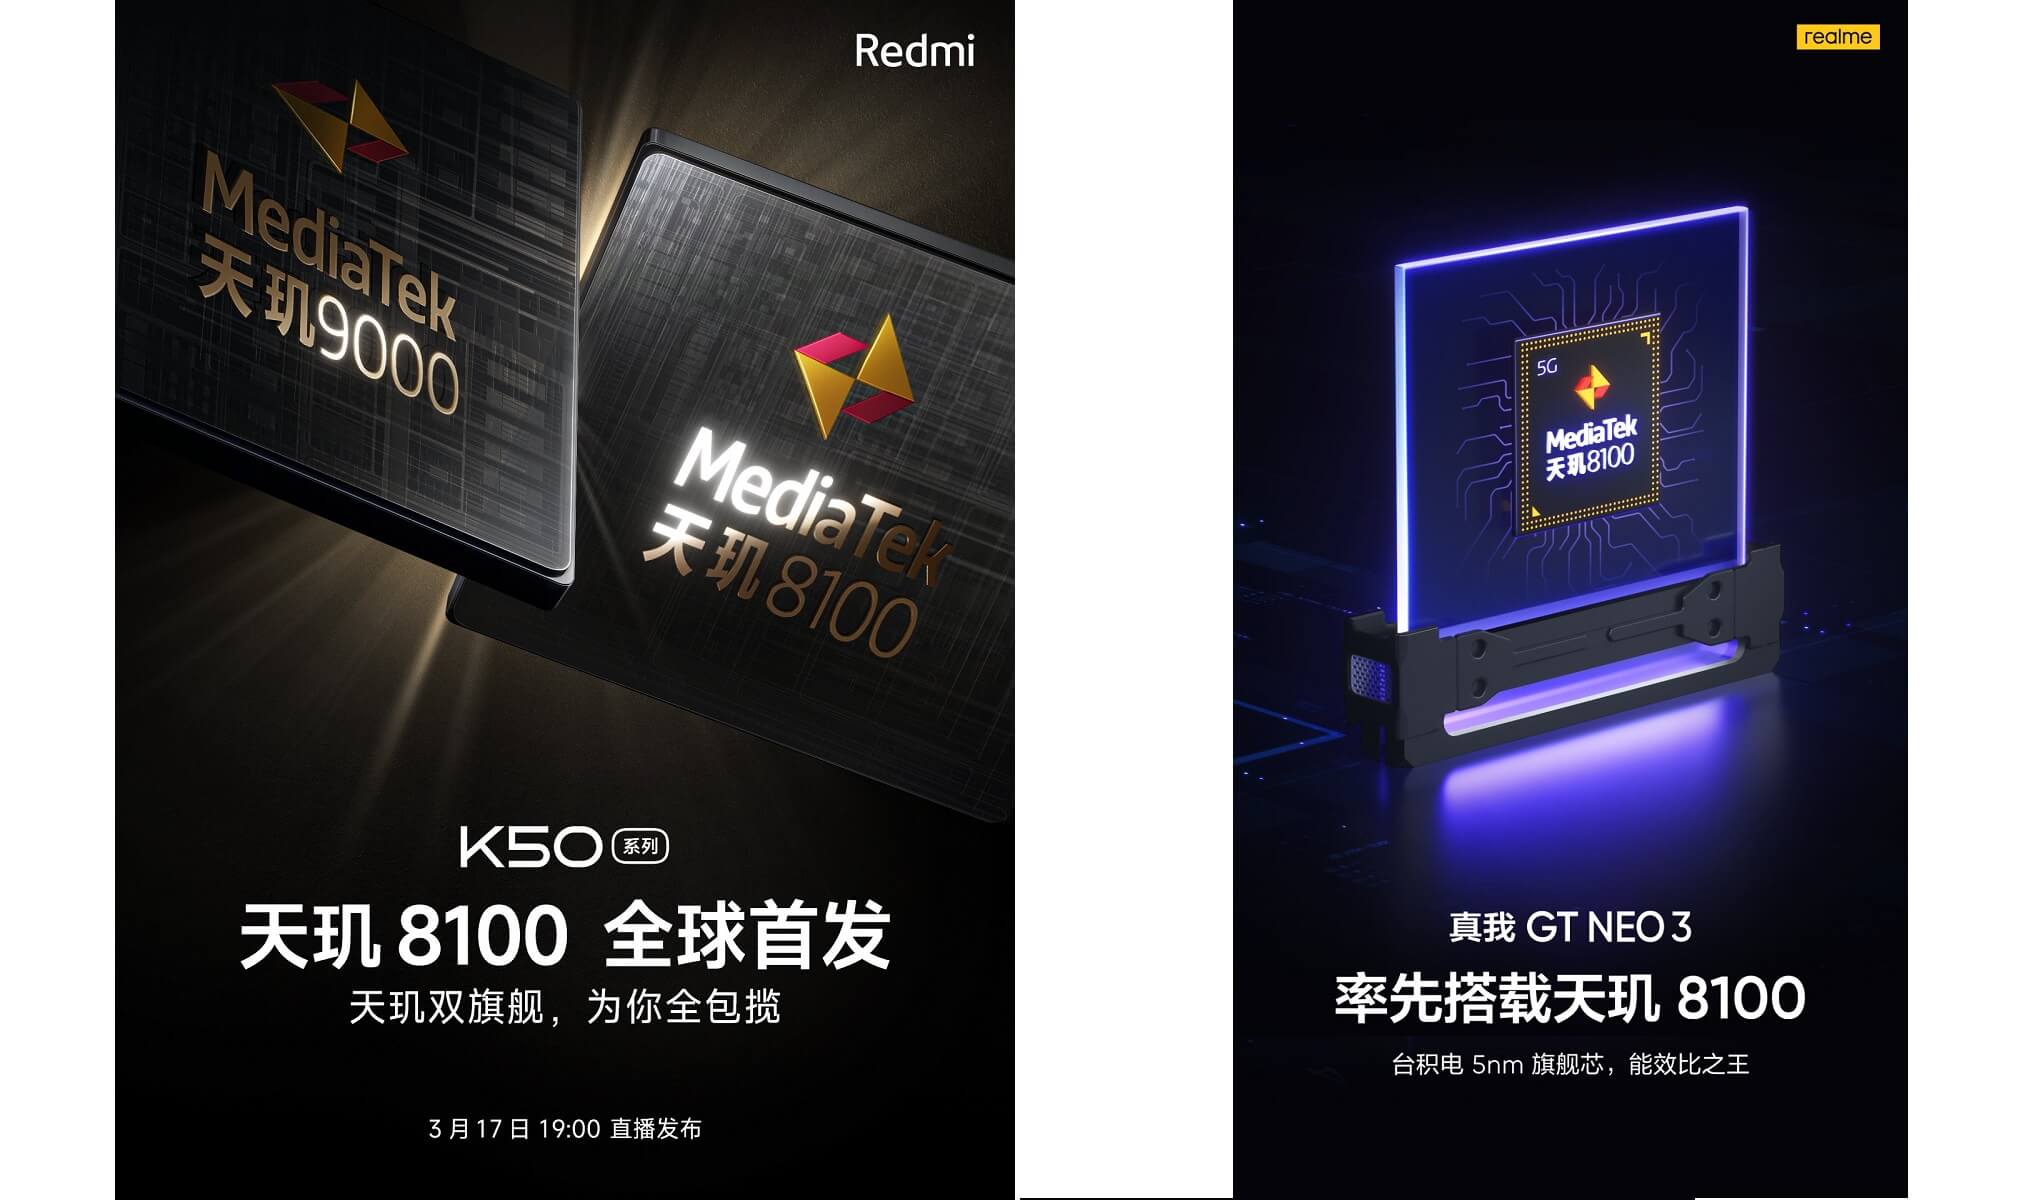 Dimensity 8100 Redmi K50 series realme GT Neo 3